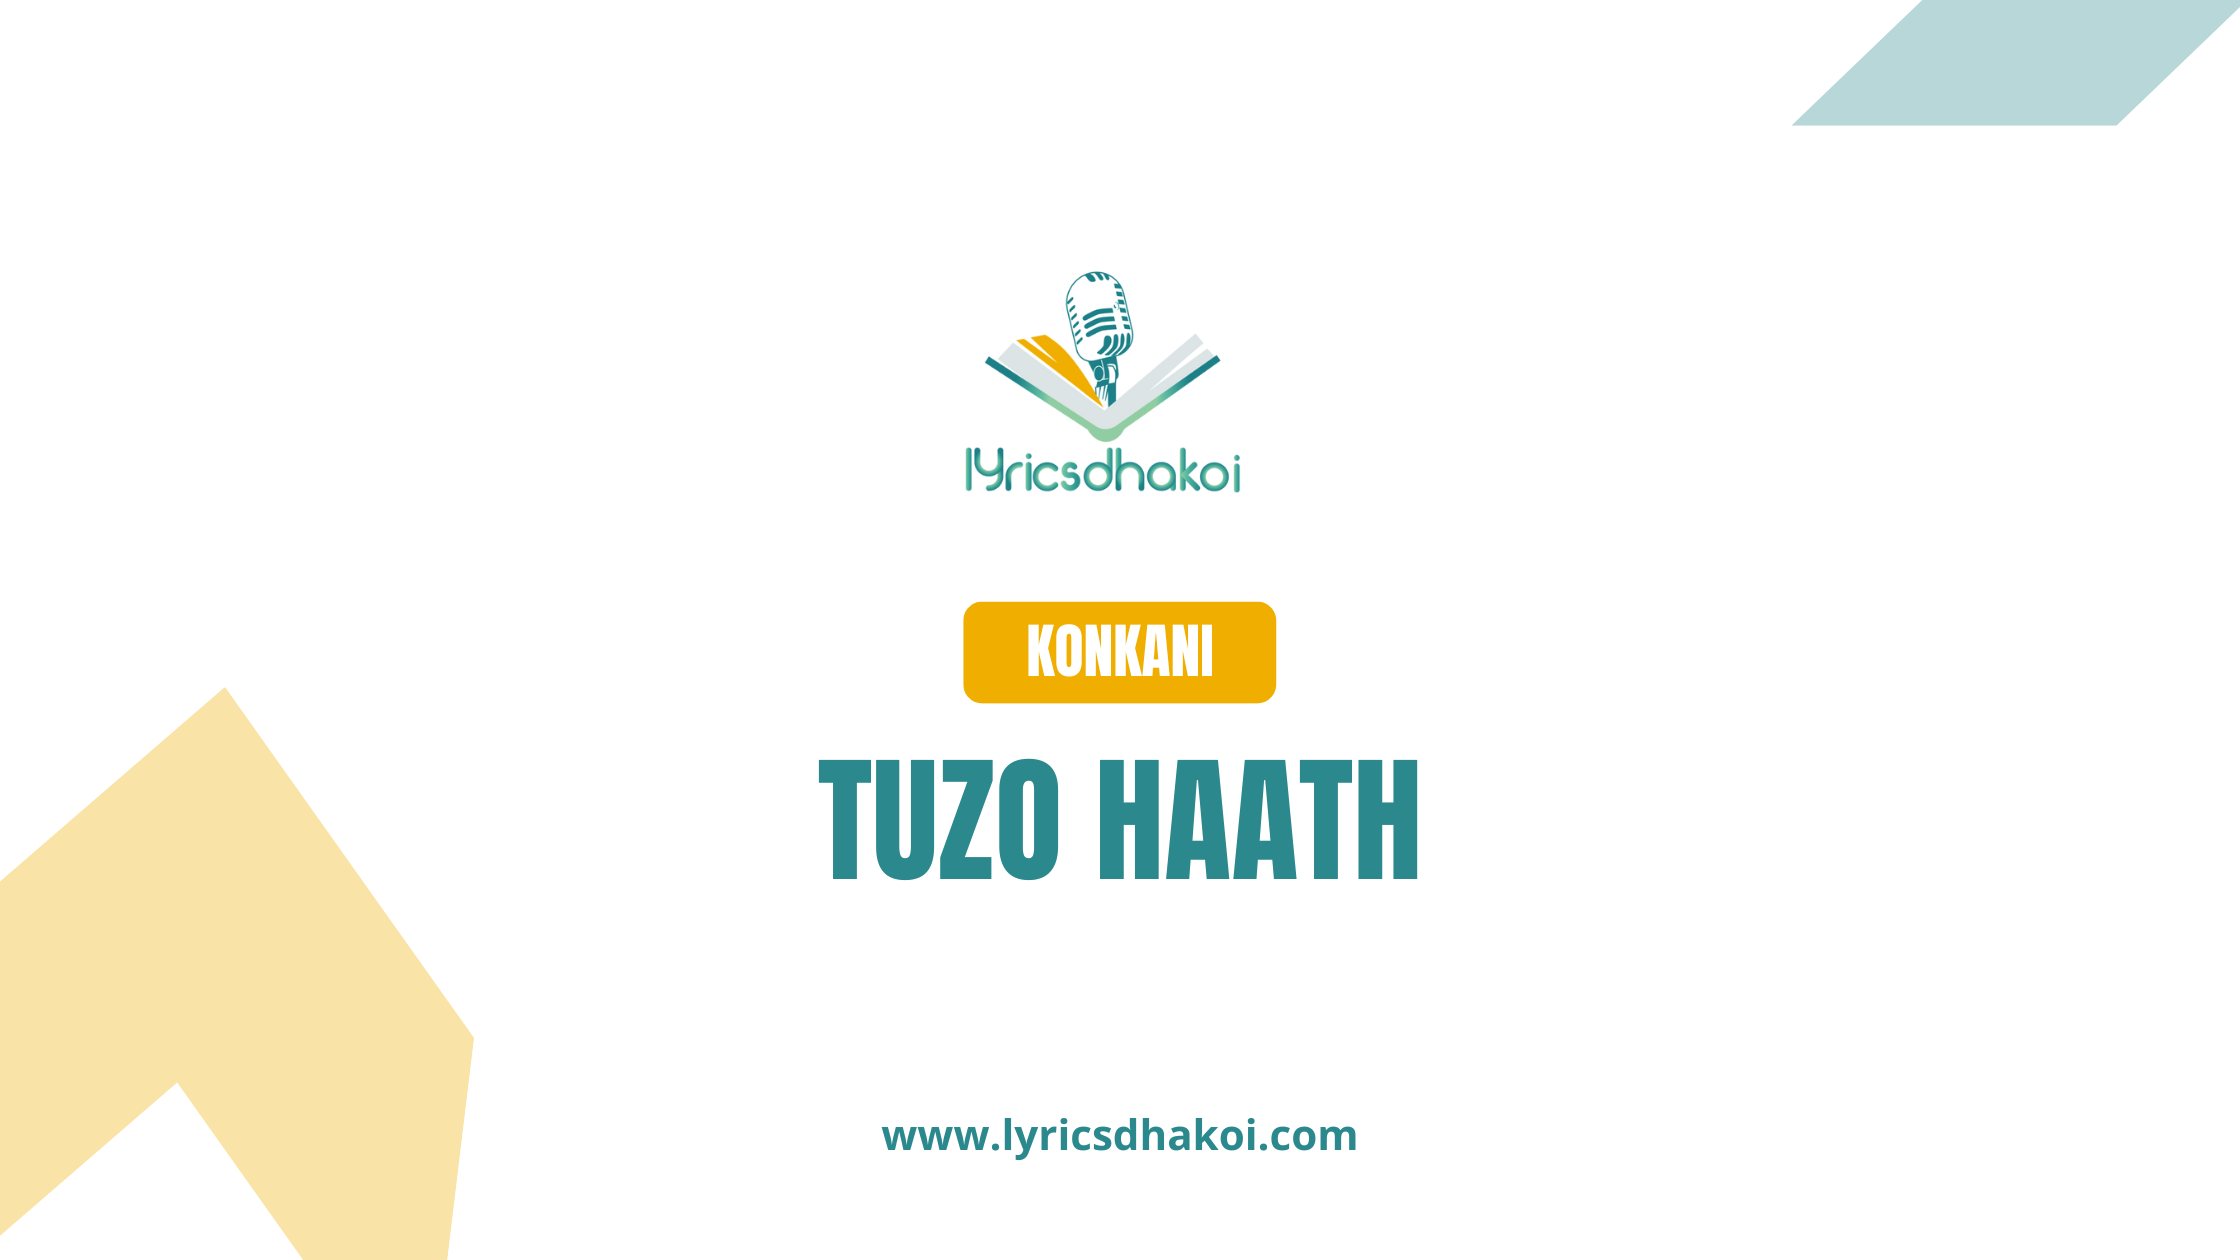 Tuzo Haath Konkani Lyrics for Karaoke Online - LyricsDhakoi.com